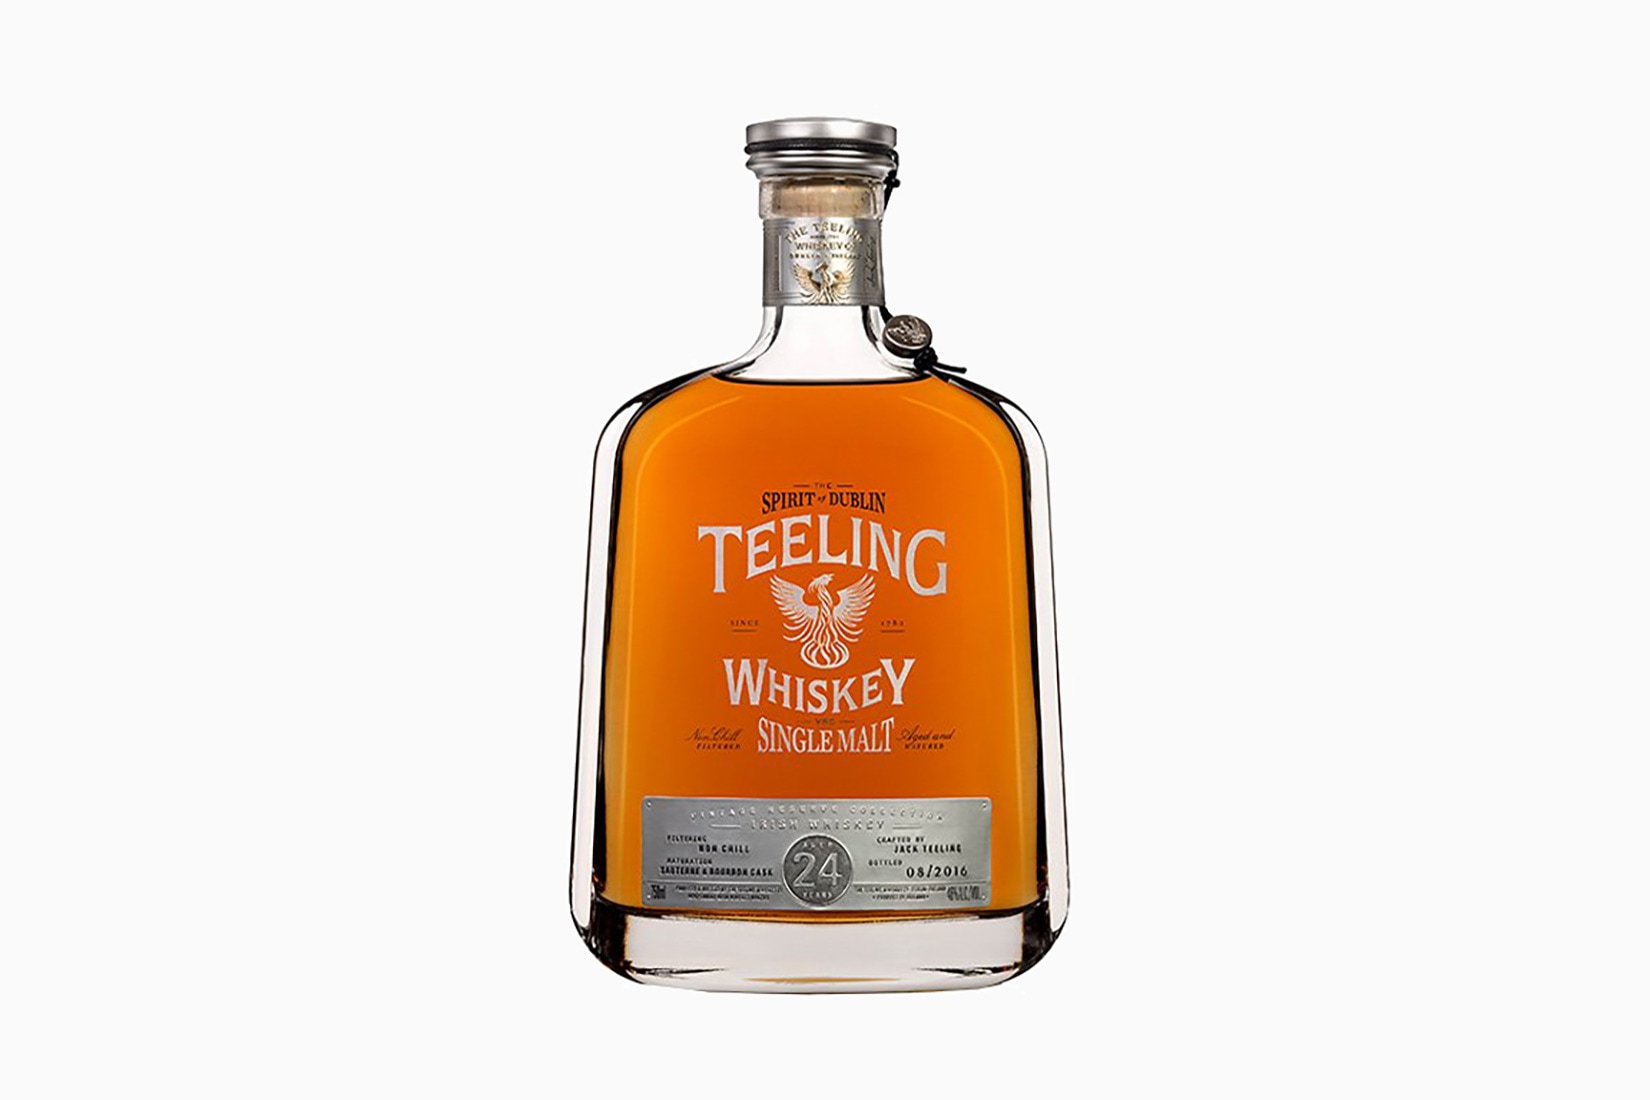 meilleures marques de whisky irish whiskey Teeling - Luxe Digital